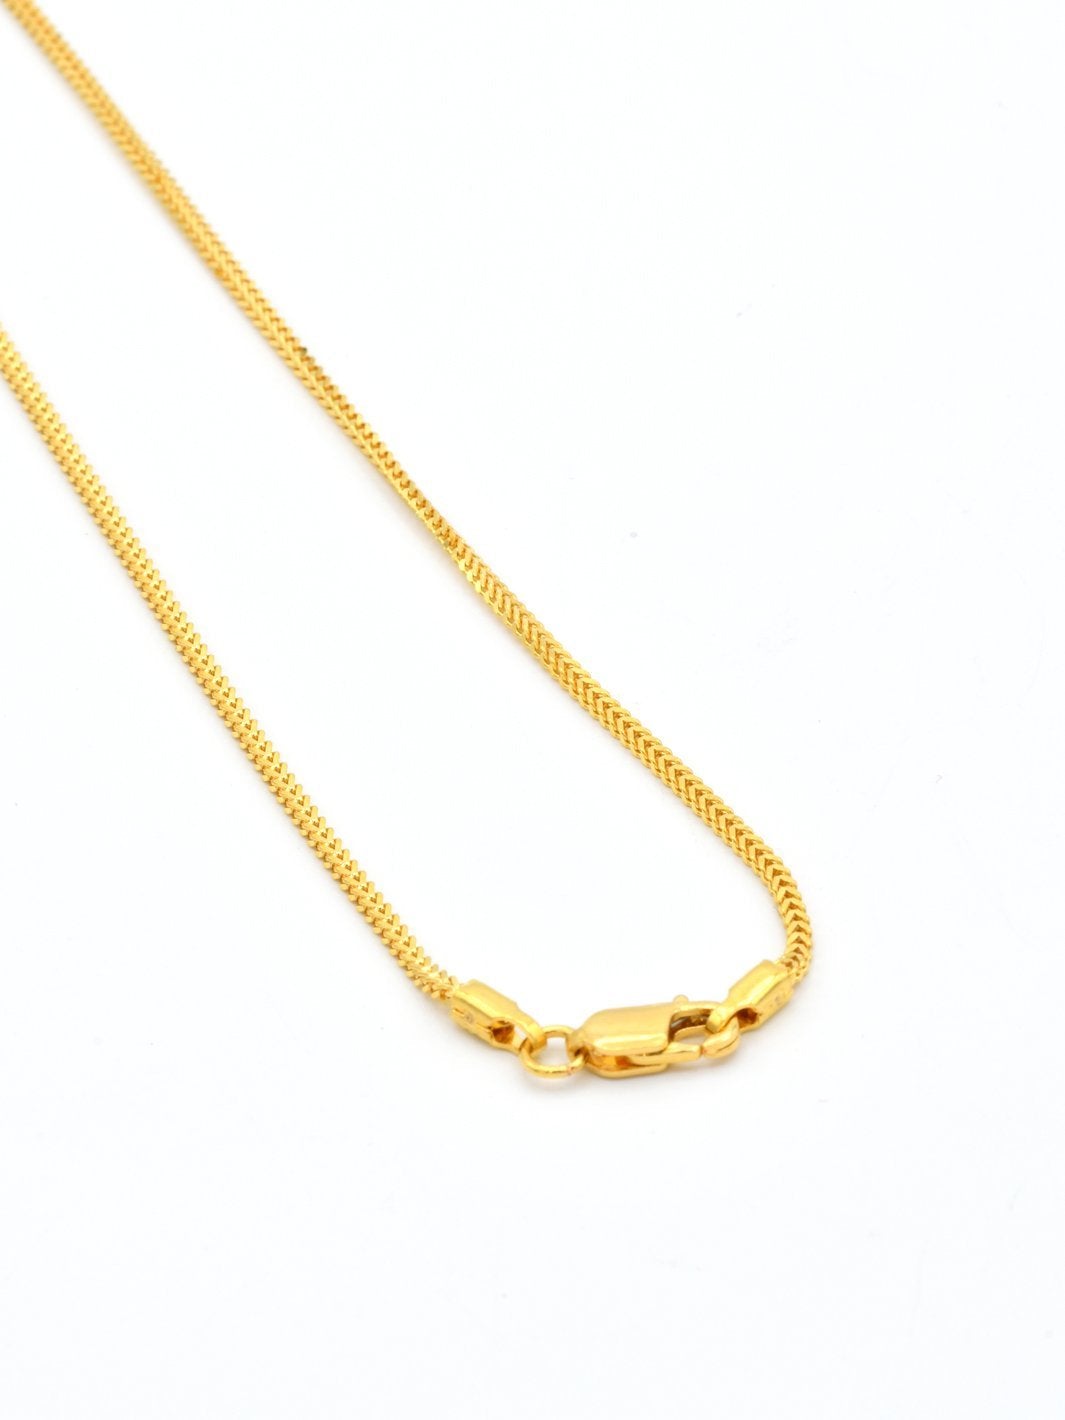 22ct Gold Fox Tail Chain - 40 cm - Roop Darshan